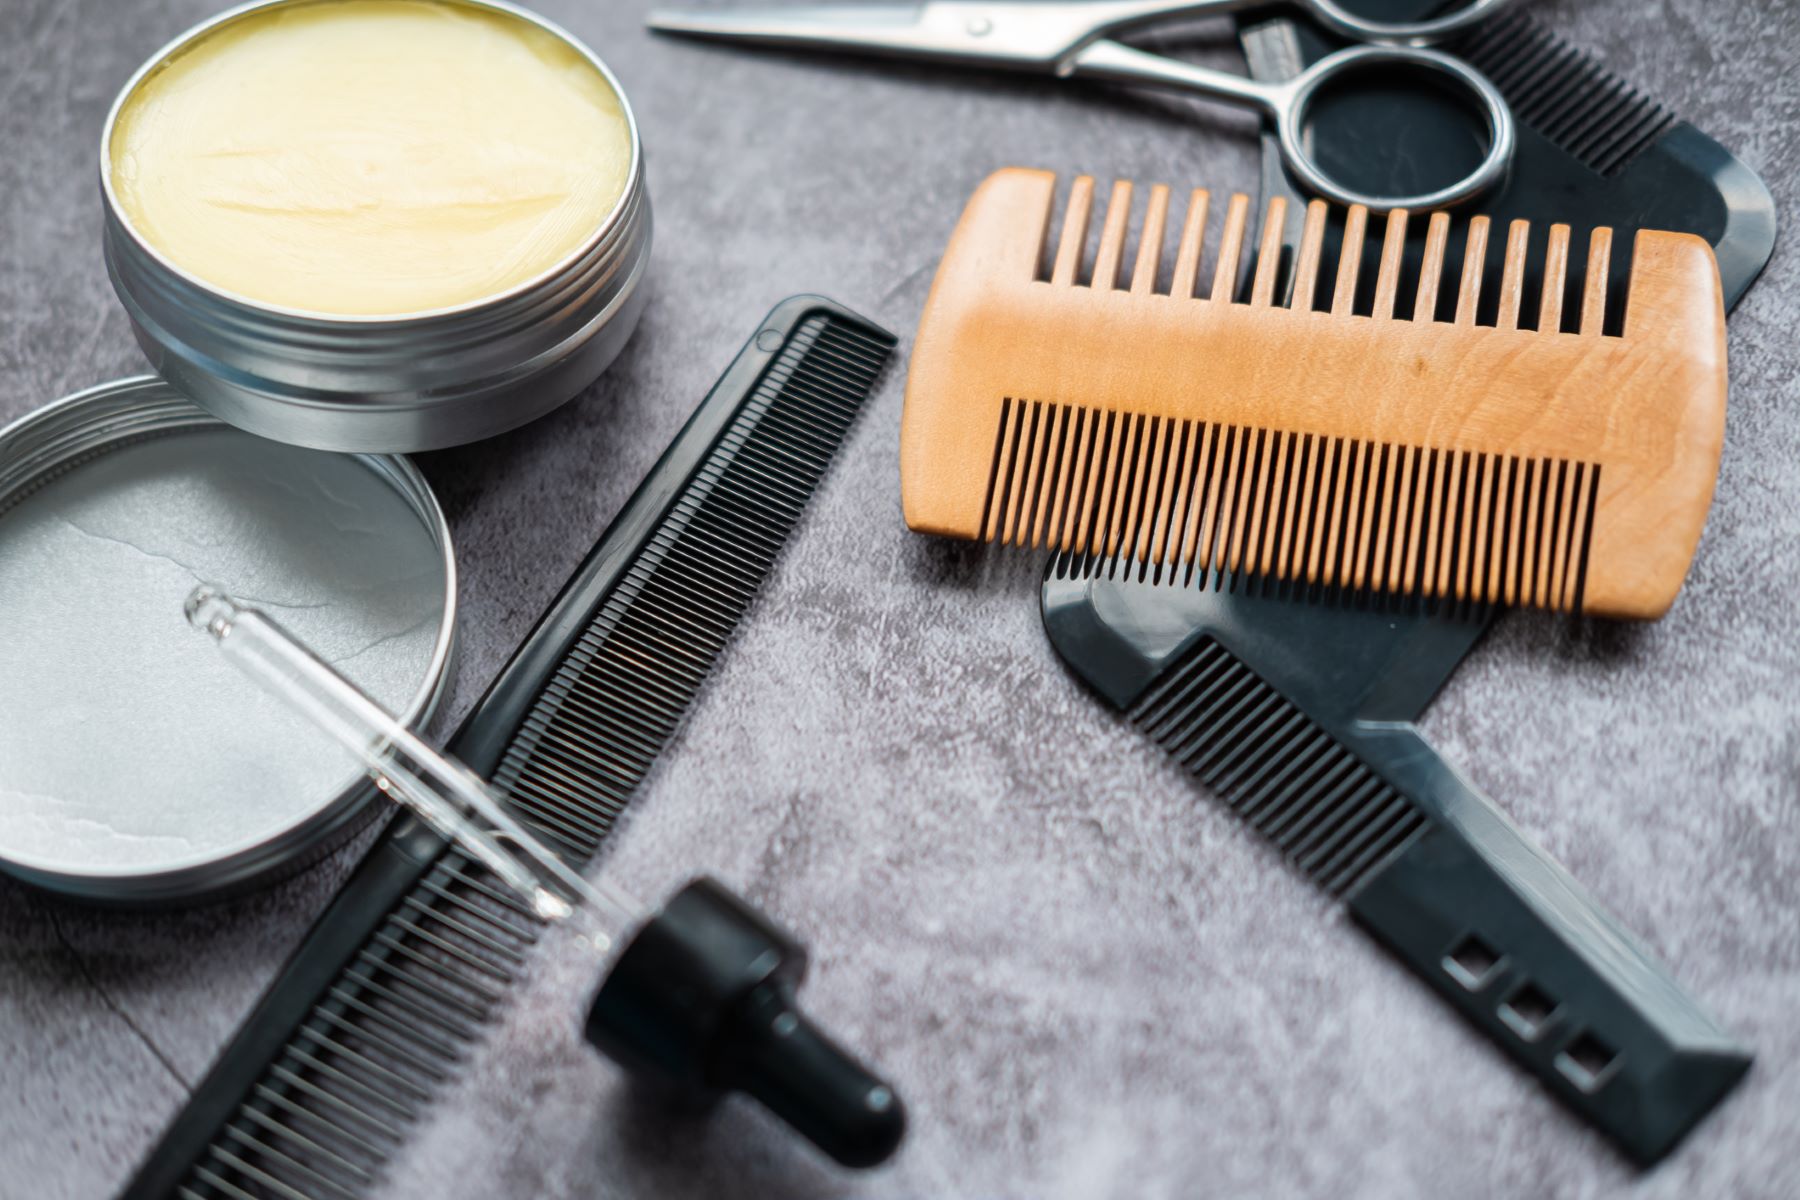 Beard grooming supplies (combs, scissors, beard balm and beard oil dropper)